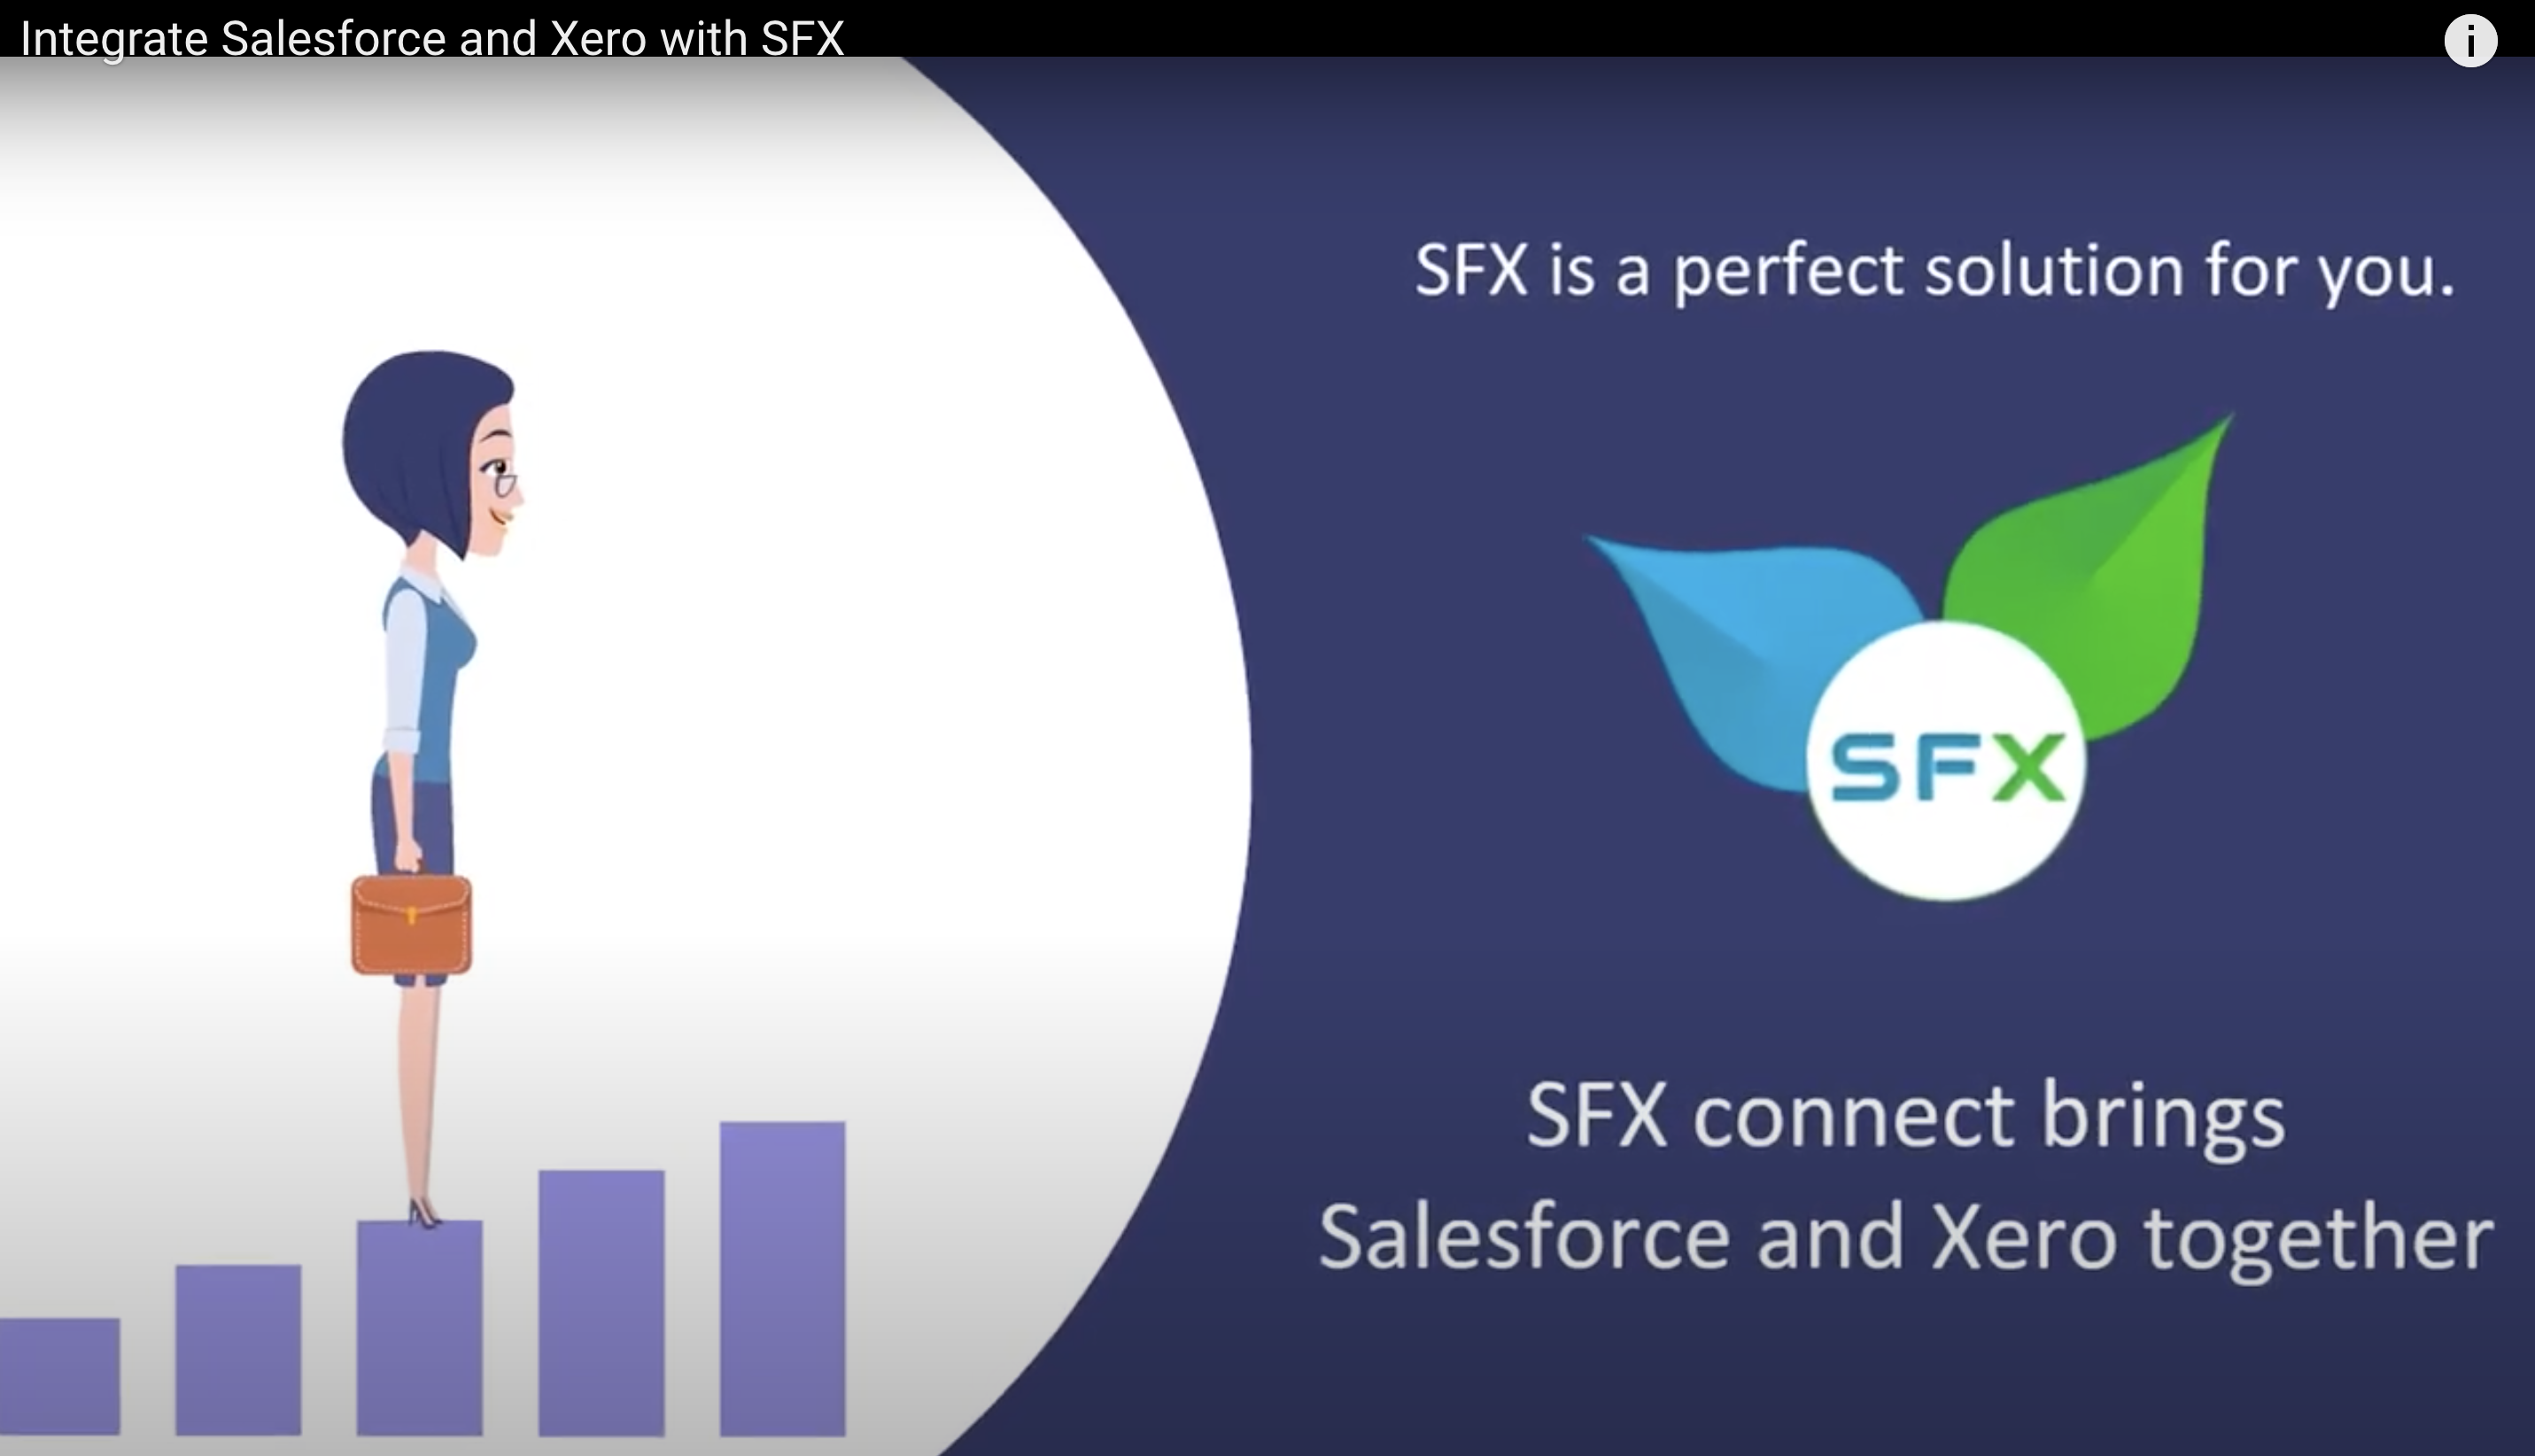 SFX Connect